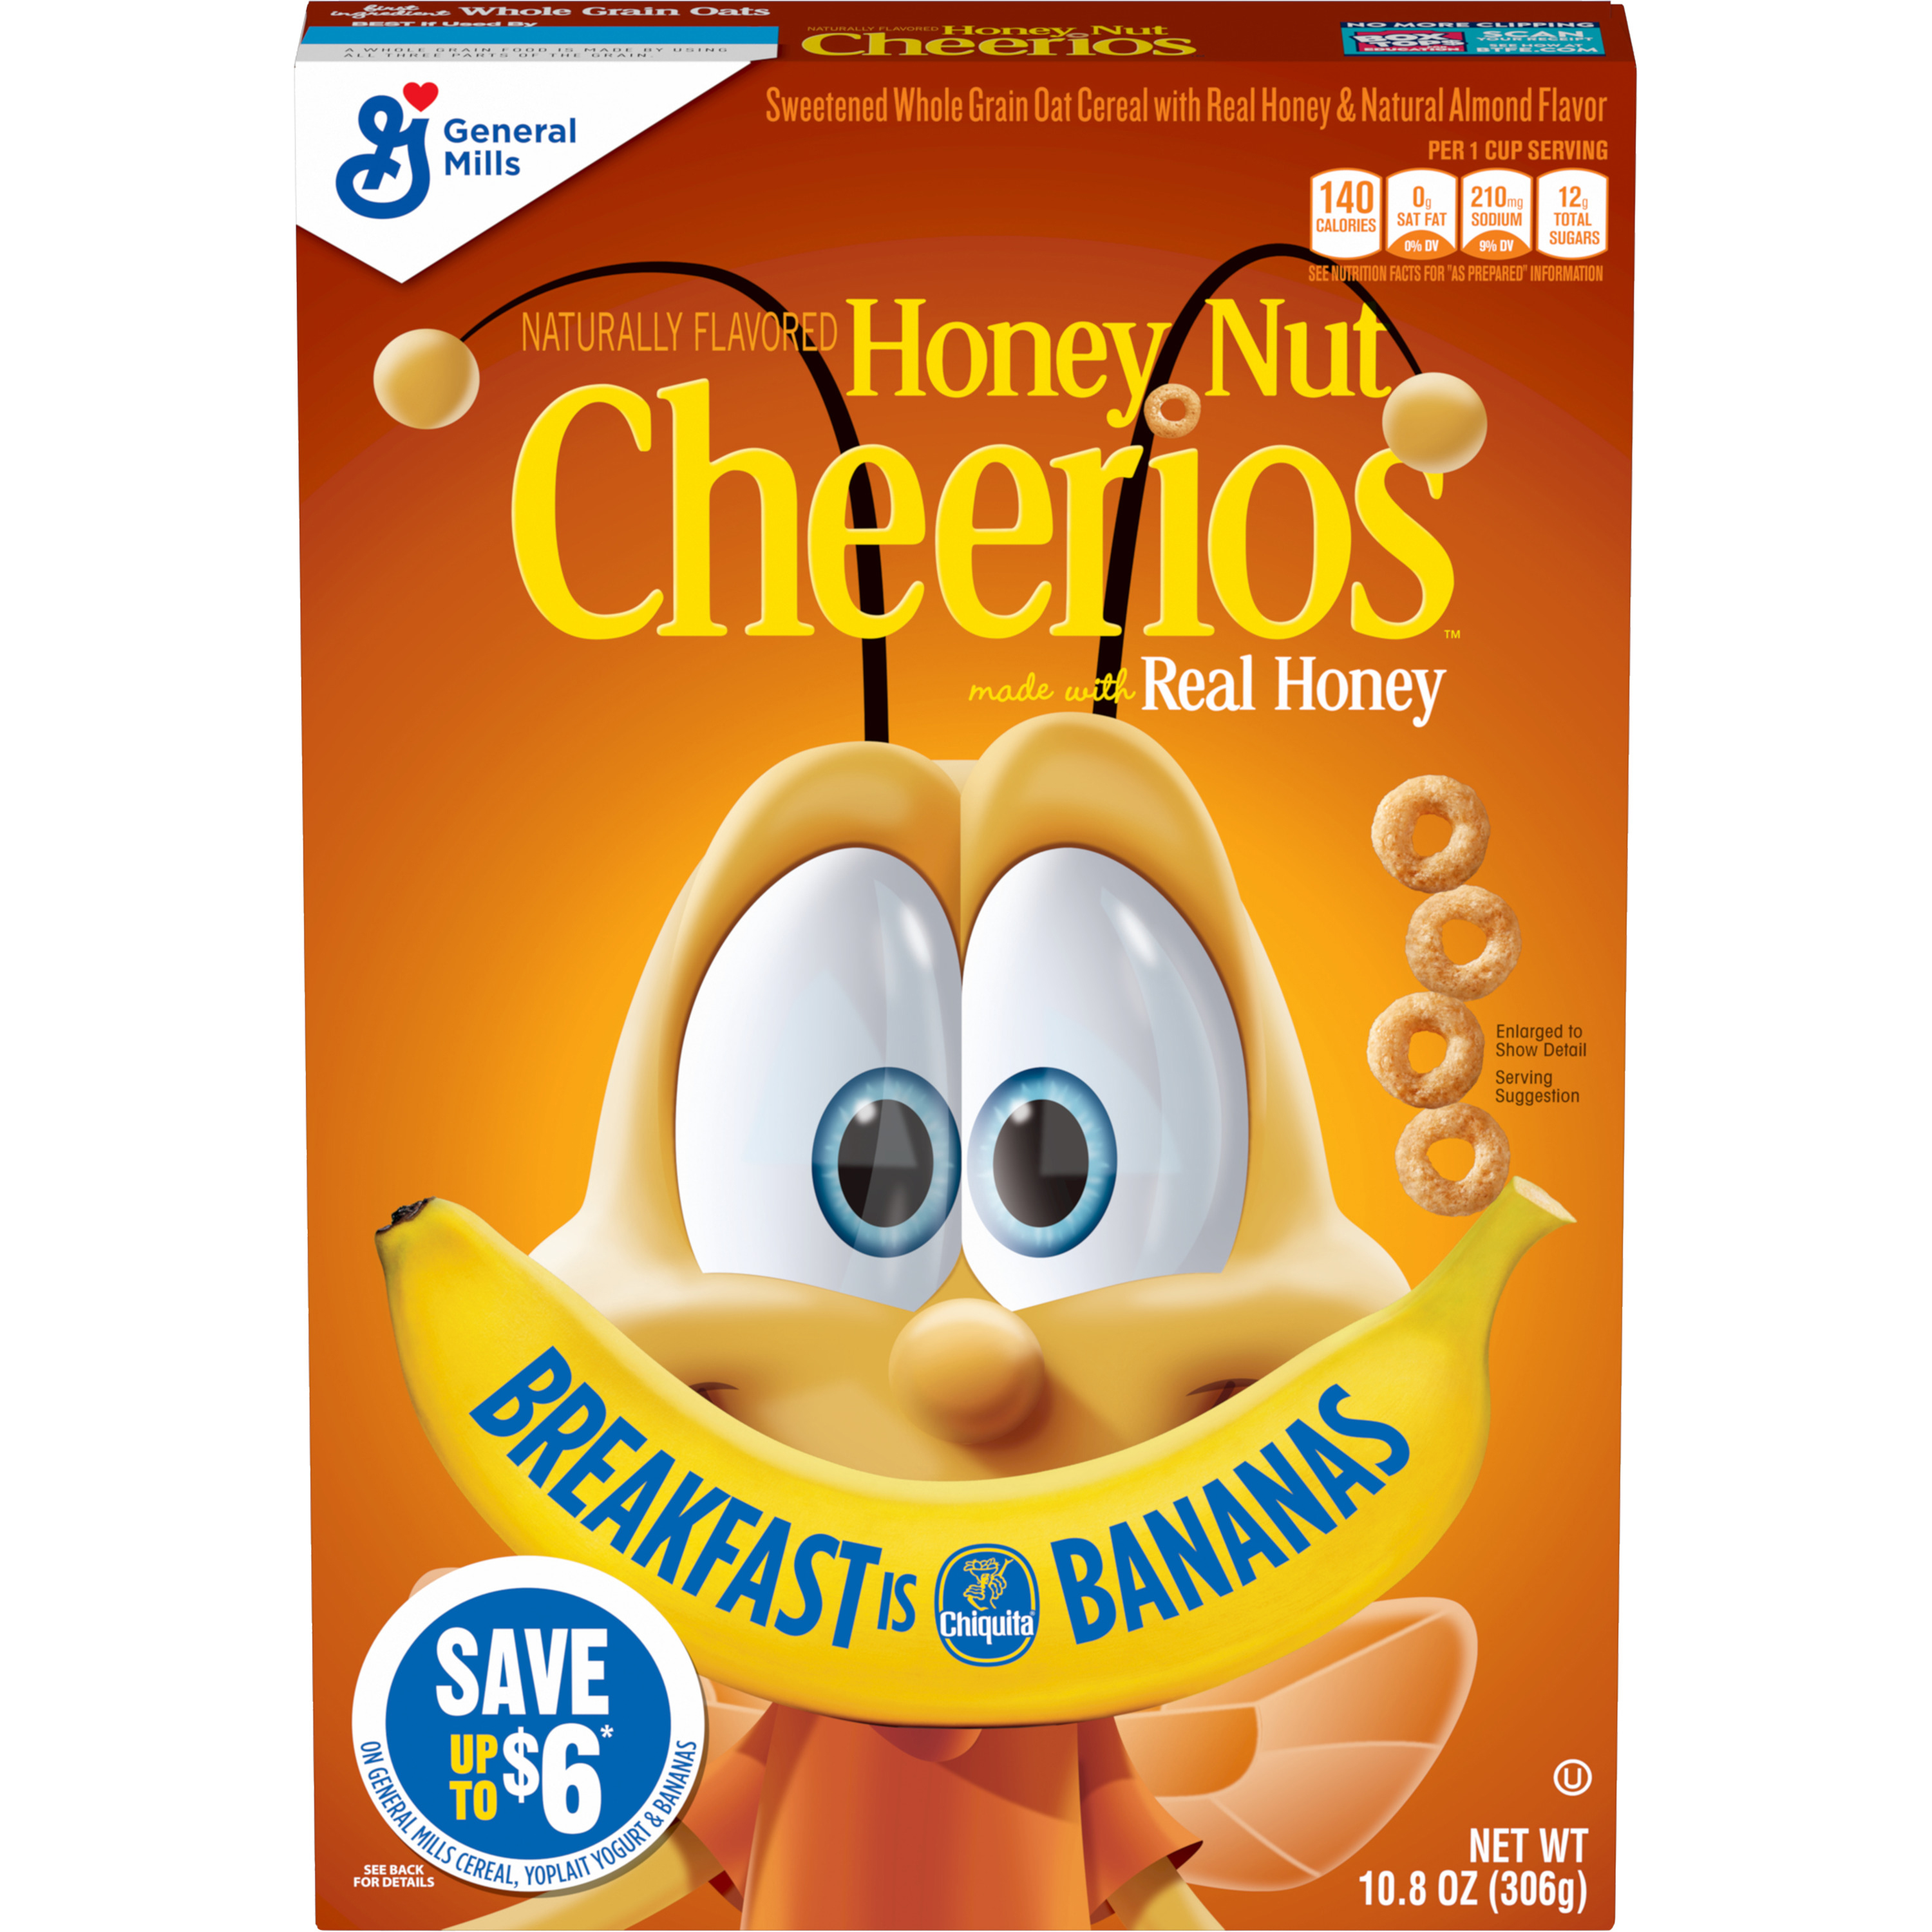 Go Bananas for Breakfast! Chiquita, General Mills and Yoplait Team